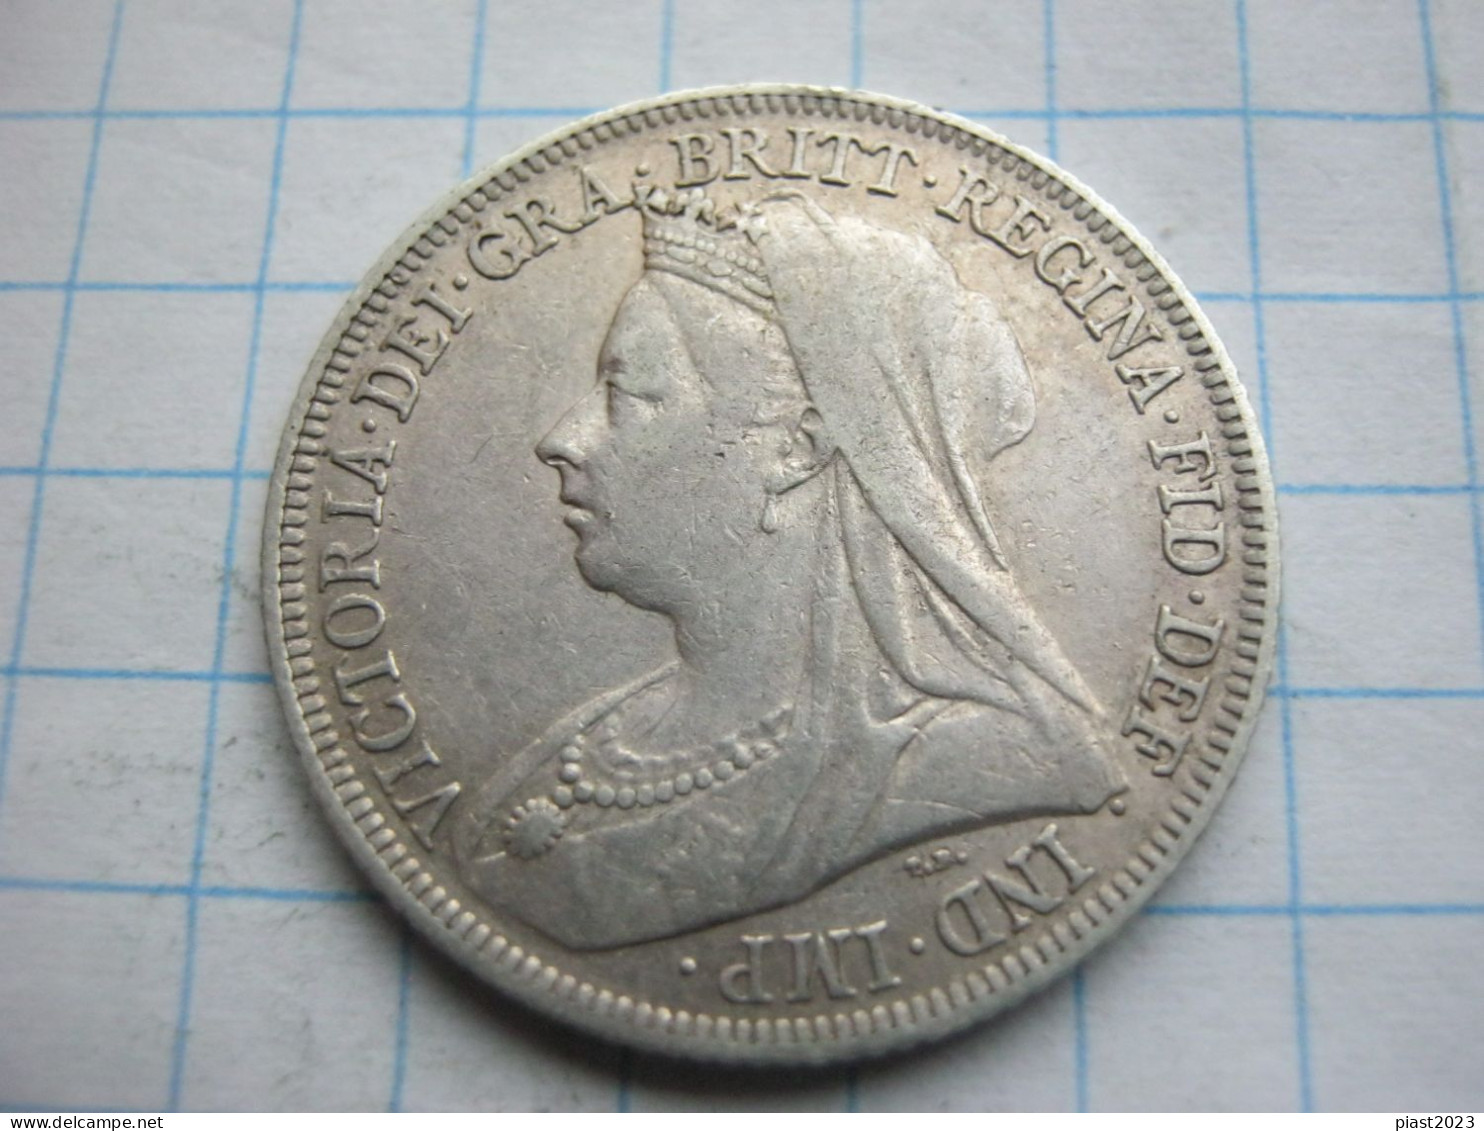 Great Britain 1 Shilling 1899 - I. 1 Shilling